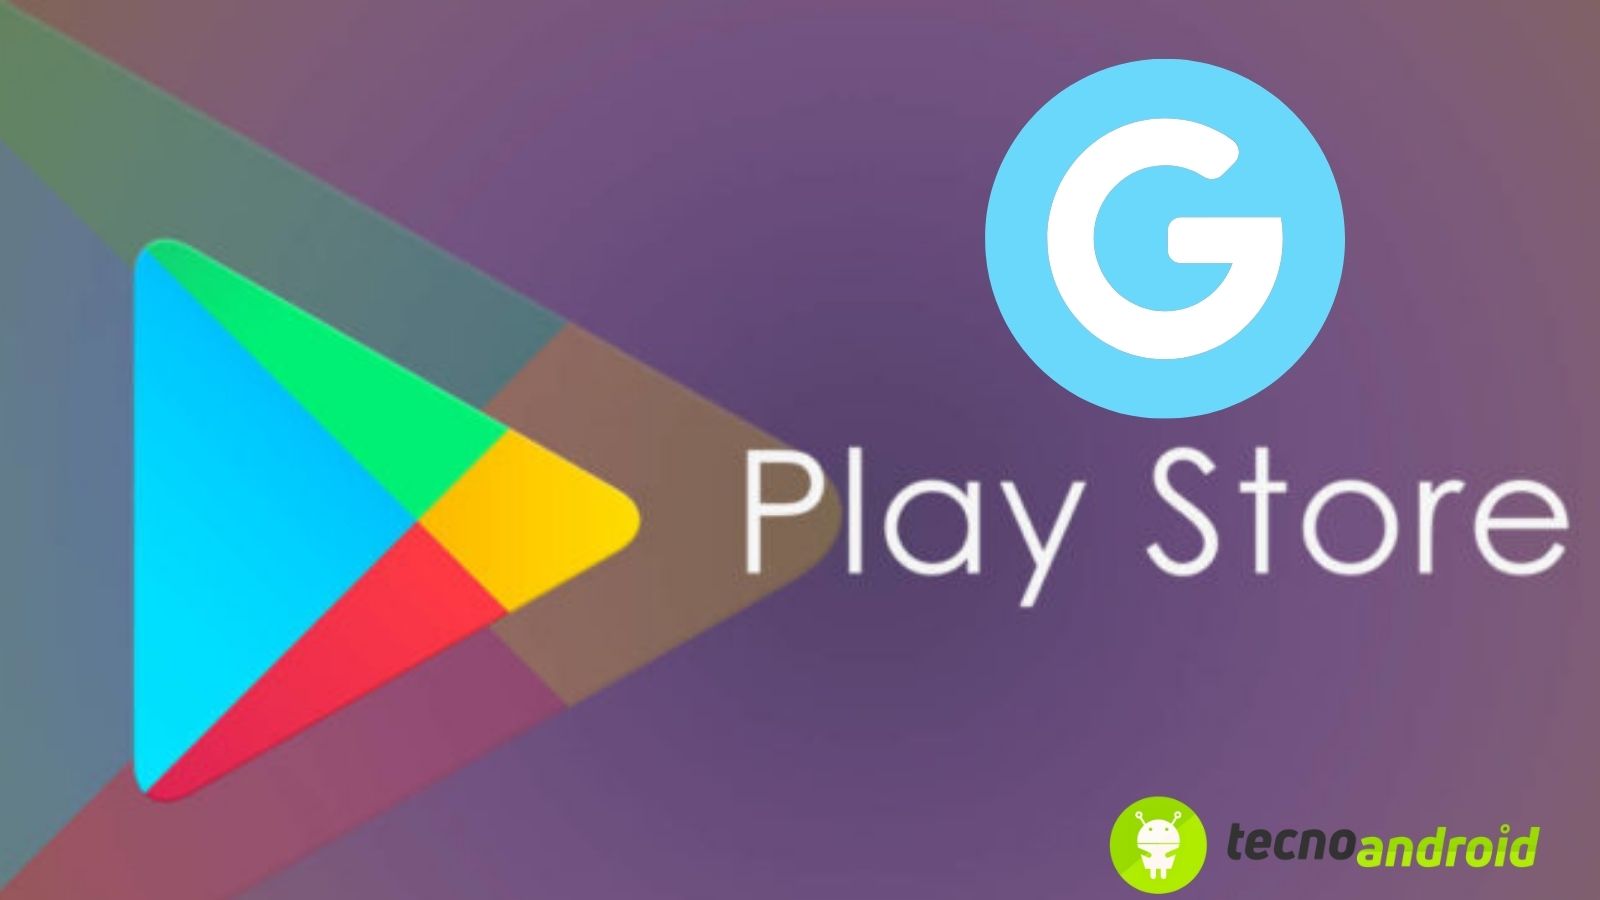 Google play store app